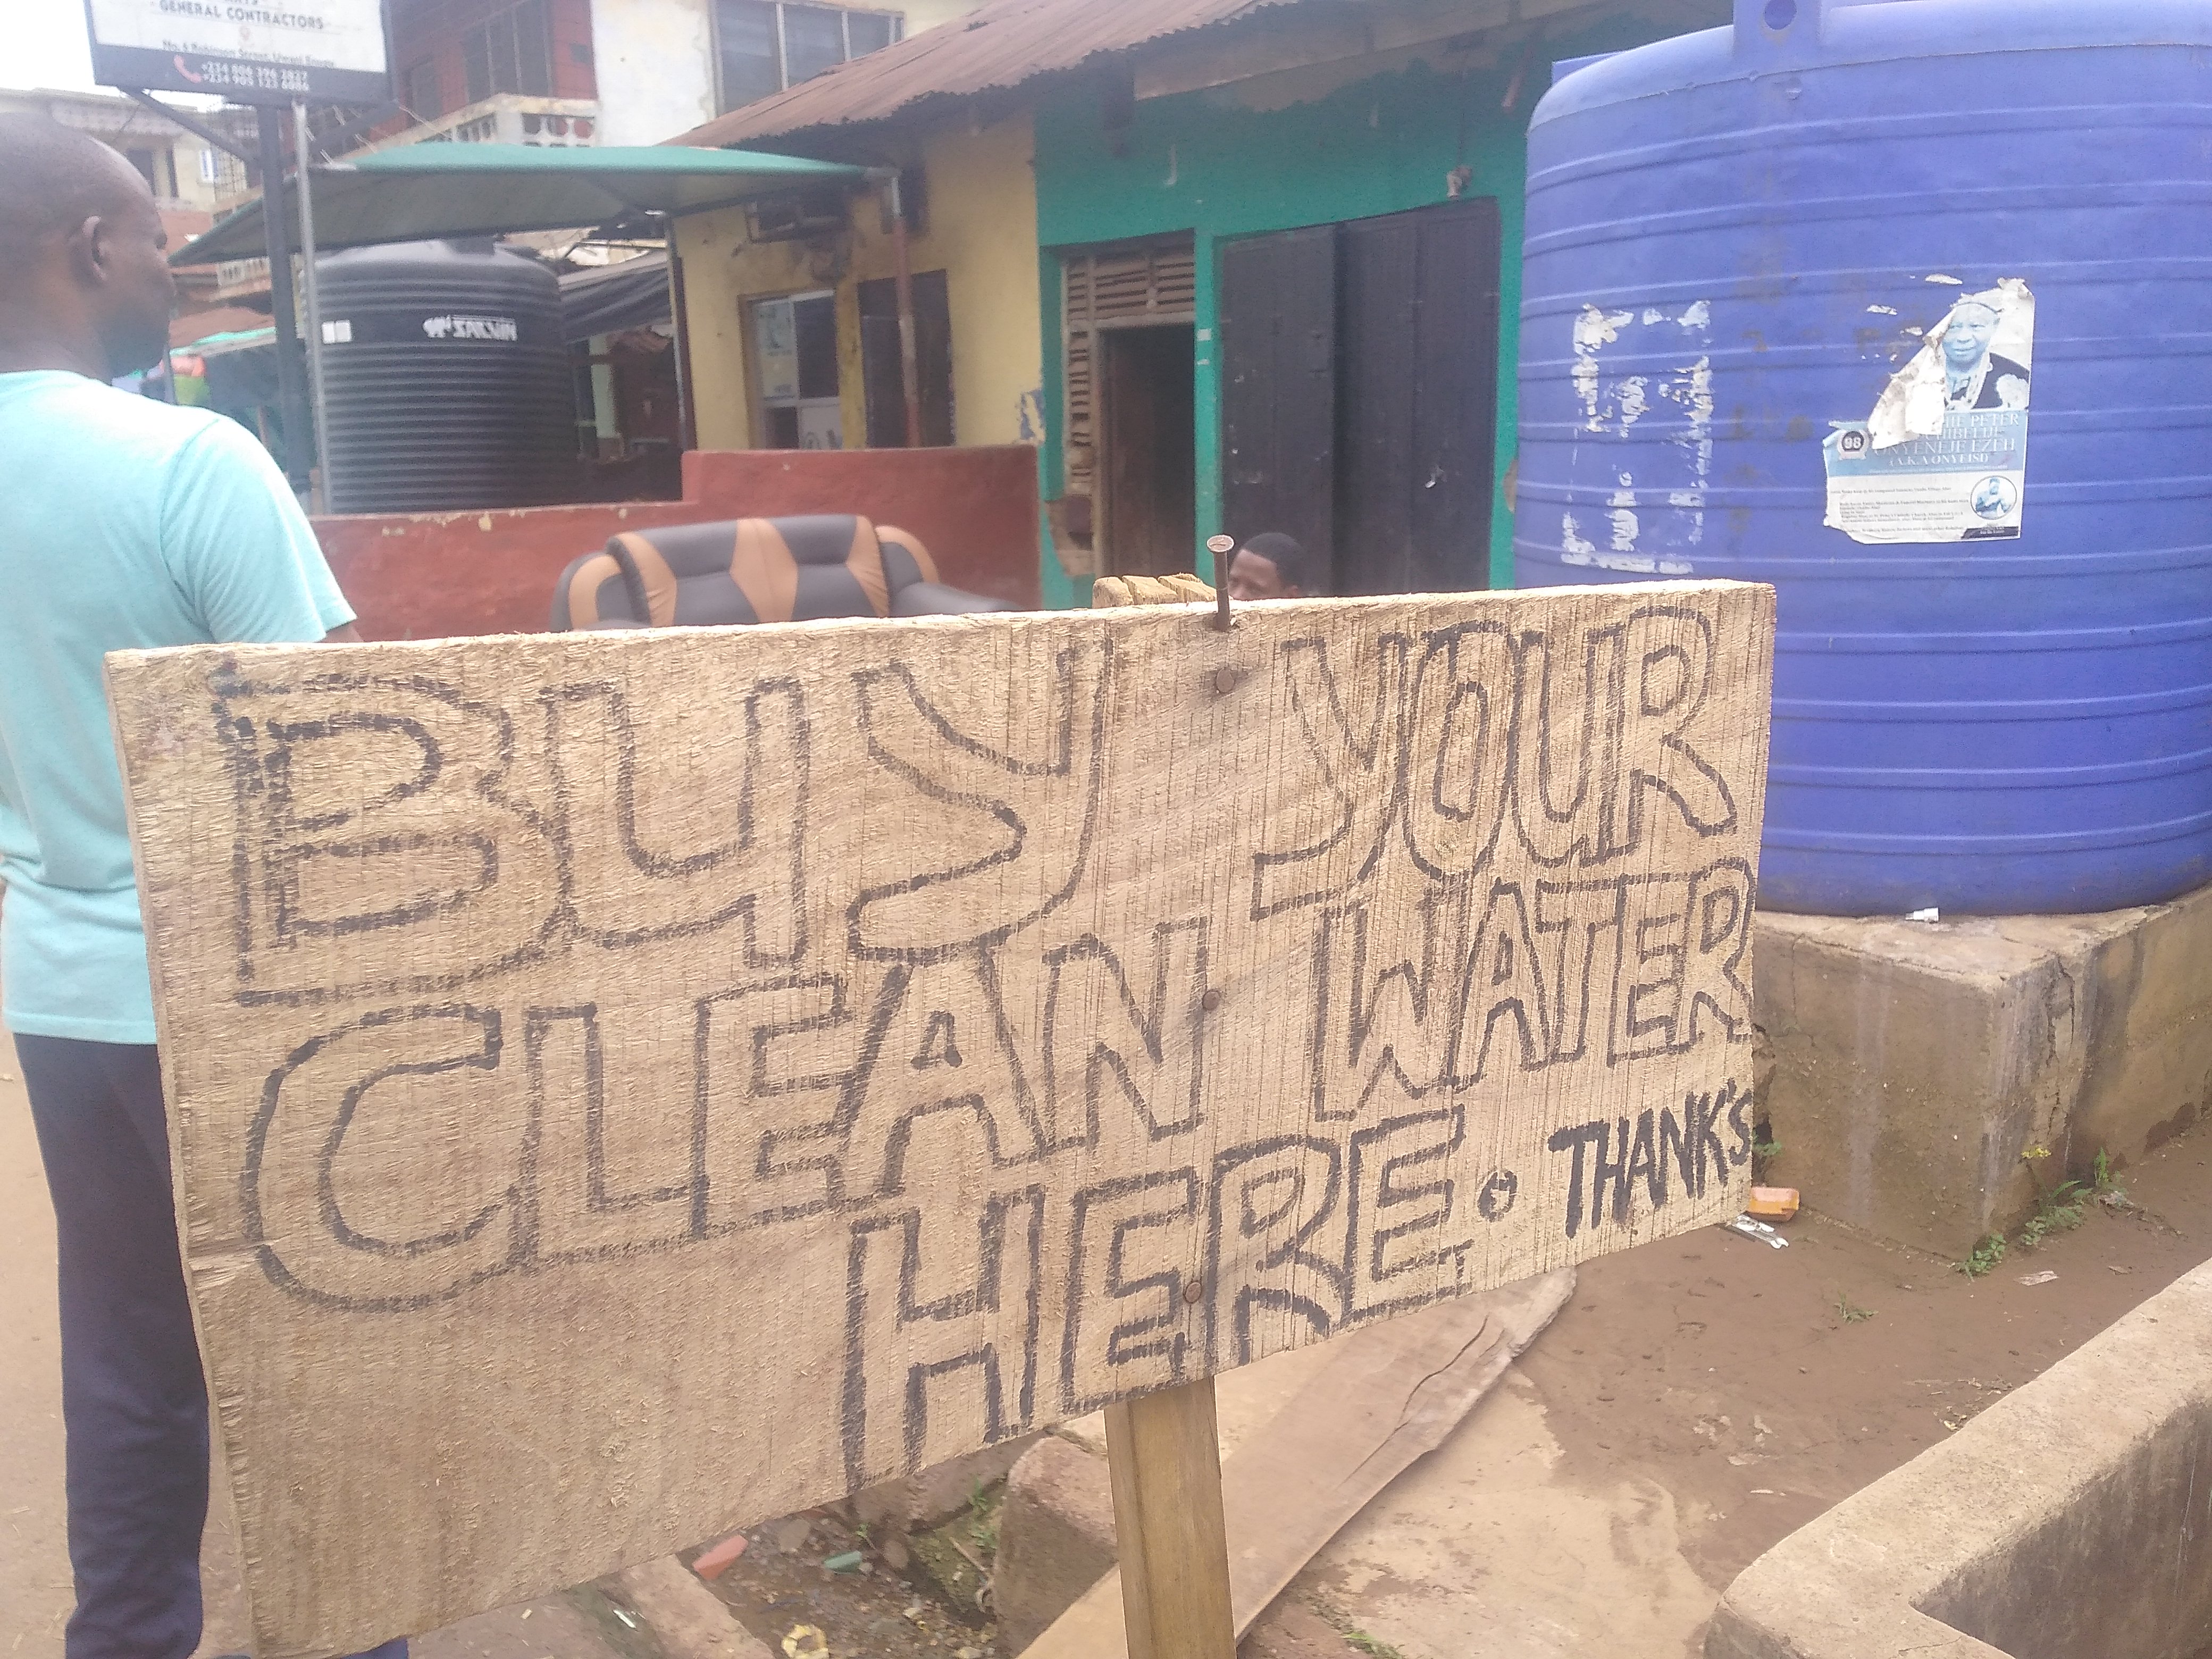 SPECIAL REPORT: In Enugu, Water Is So Scarce Residents Sometimes Scoop From Soakaways